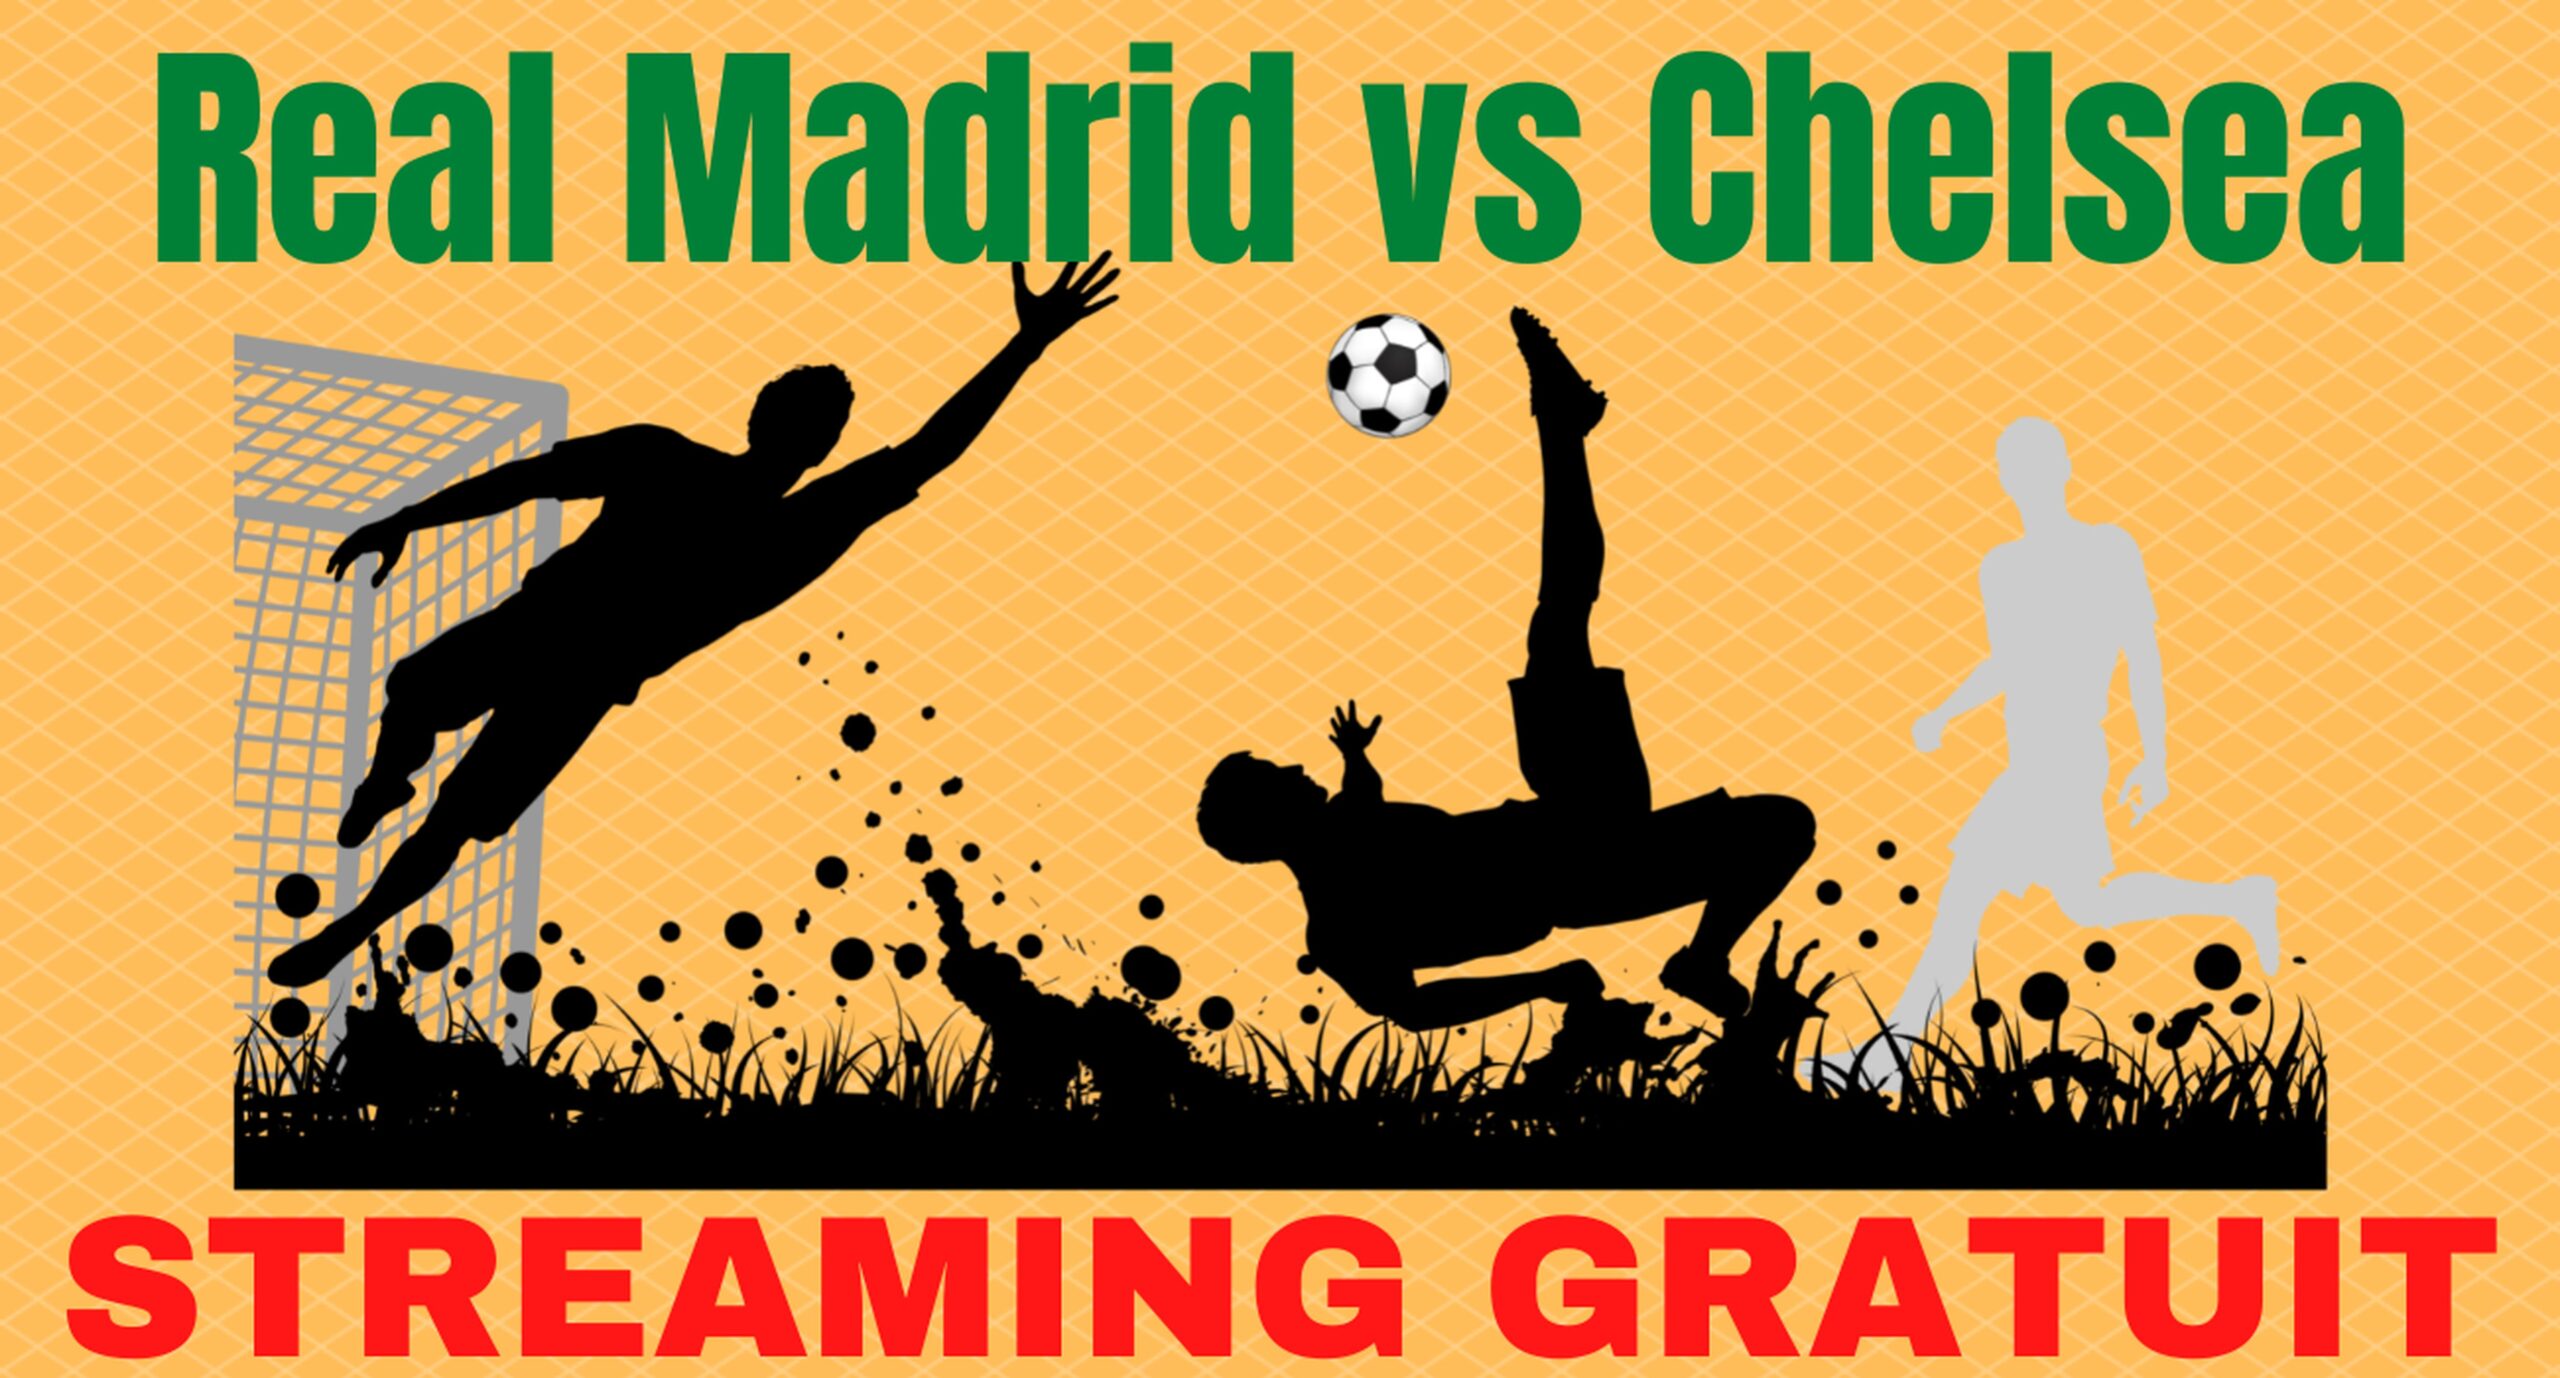 Real Madrid Chelsea en Streaming Gratuit Direct